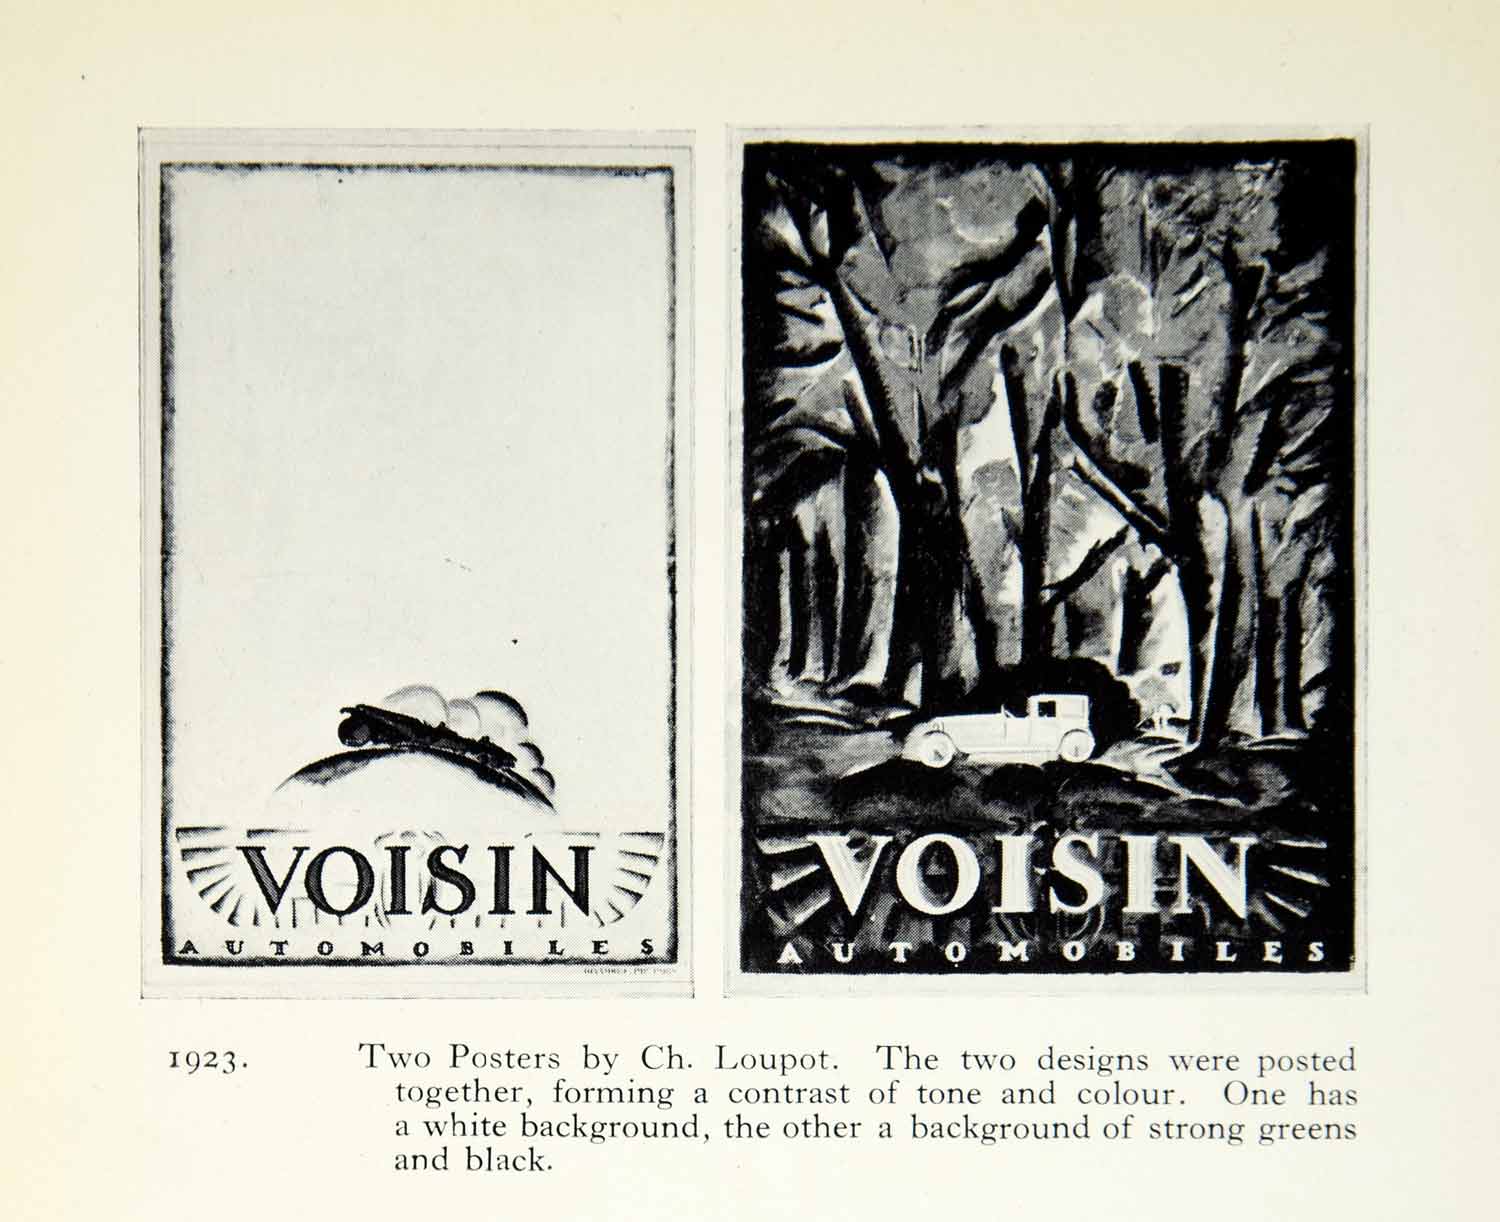 1927 Print Charles Loupot Voisin Automobiles Poster Design Graphic Art XDH5